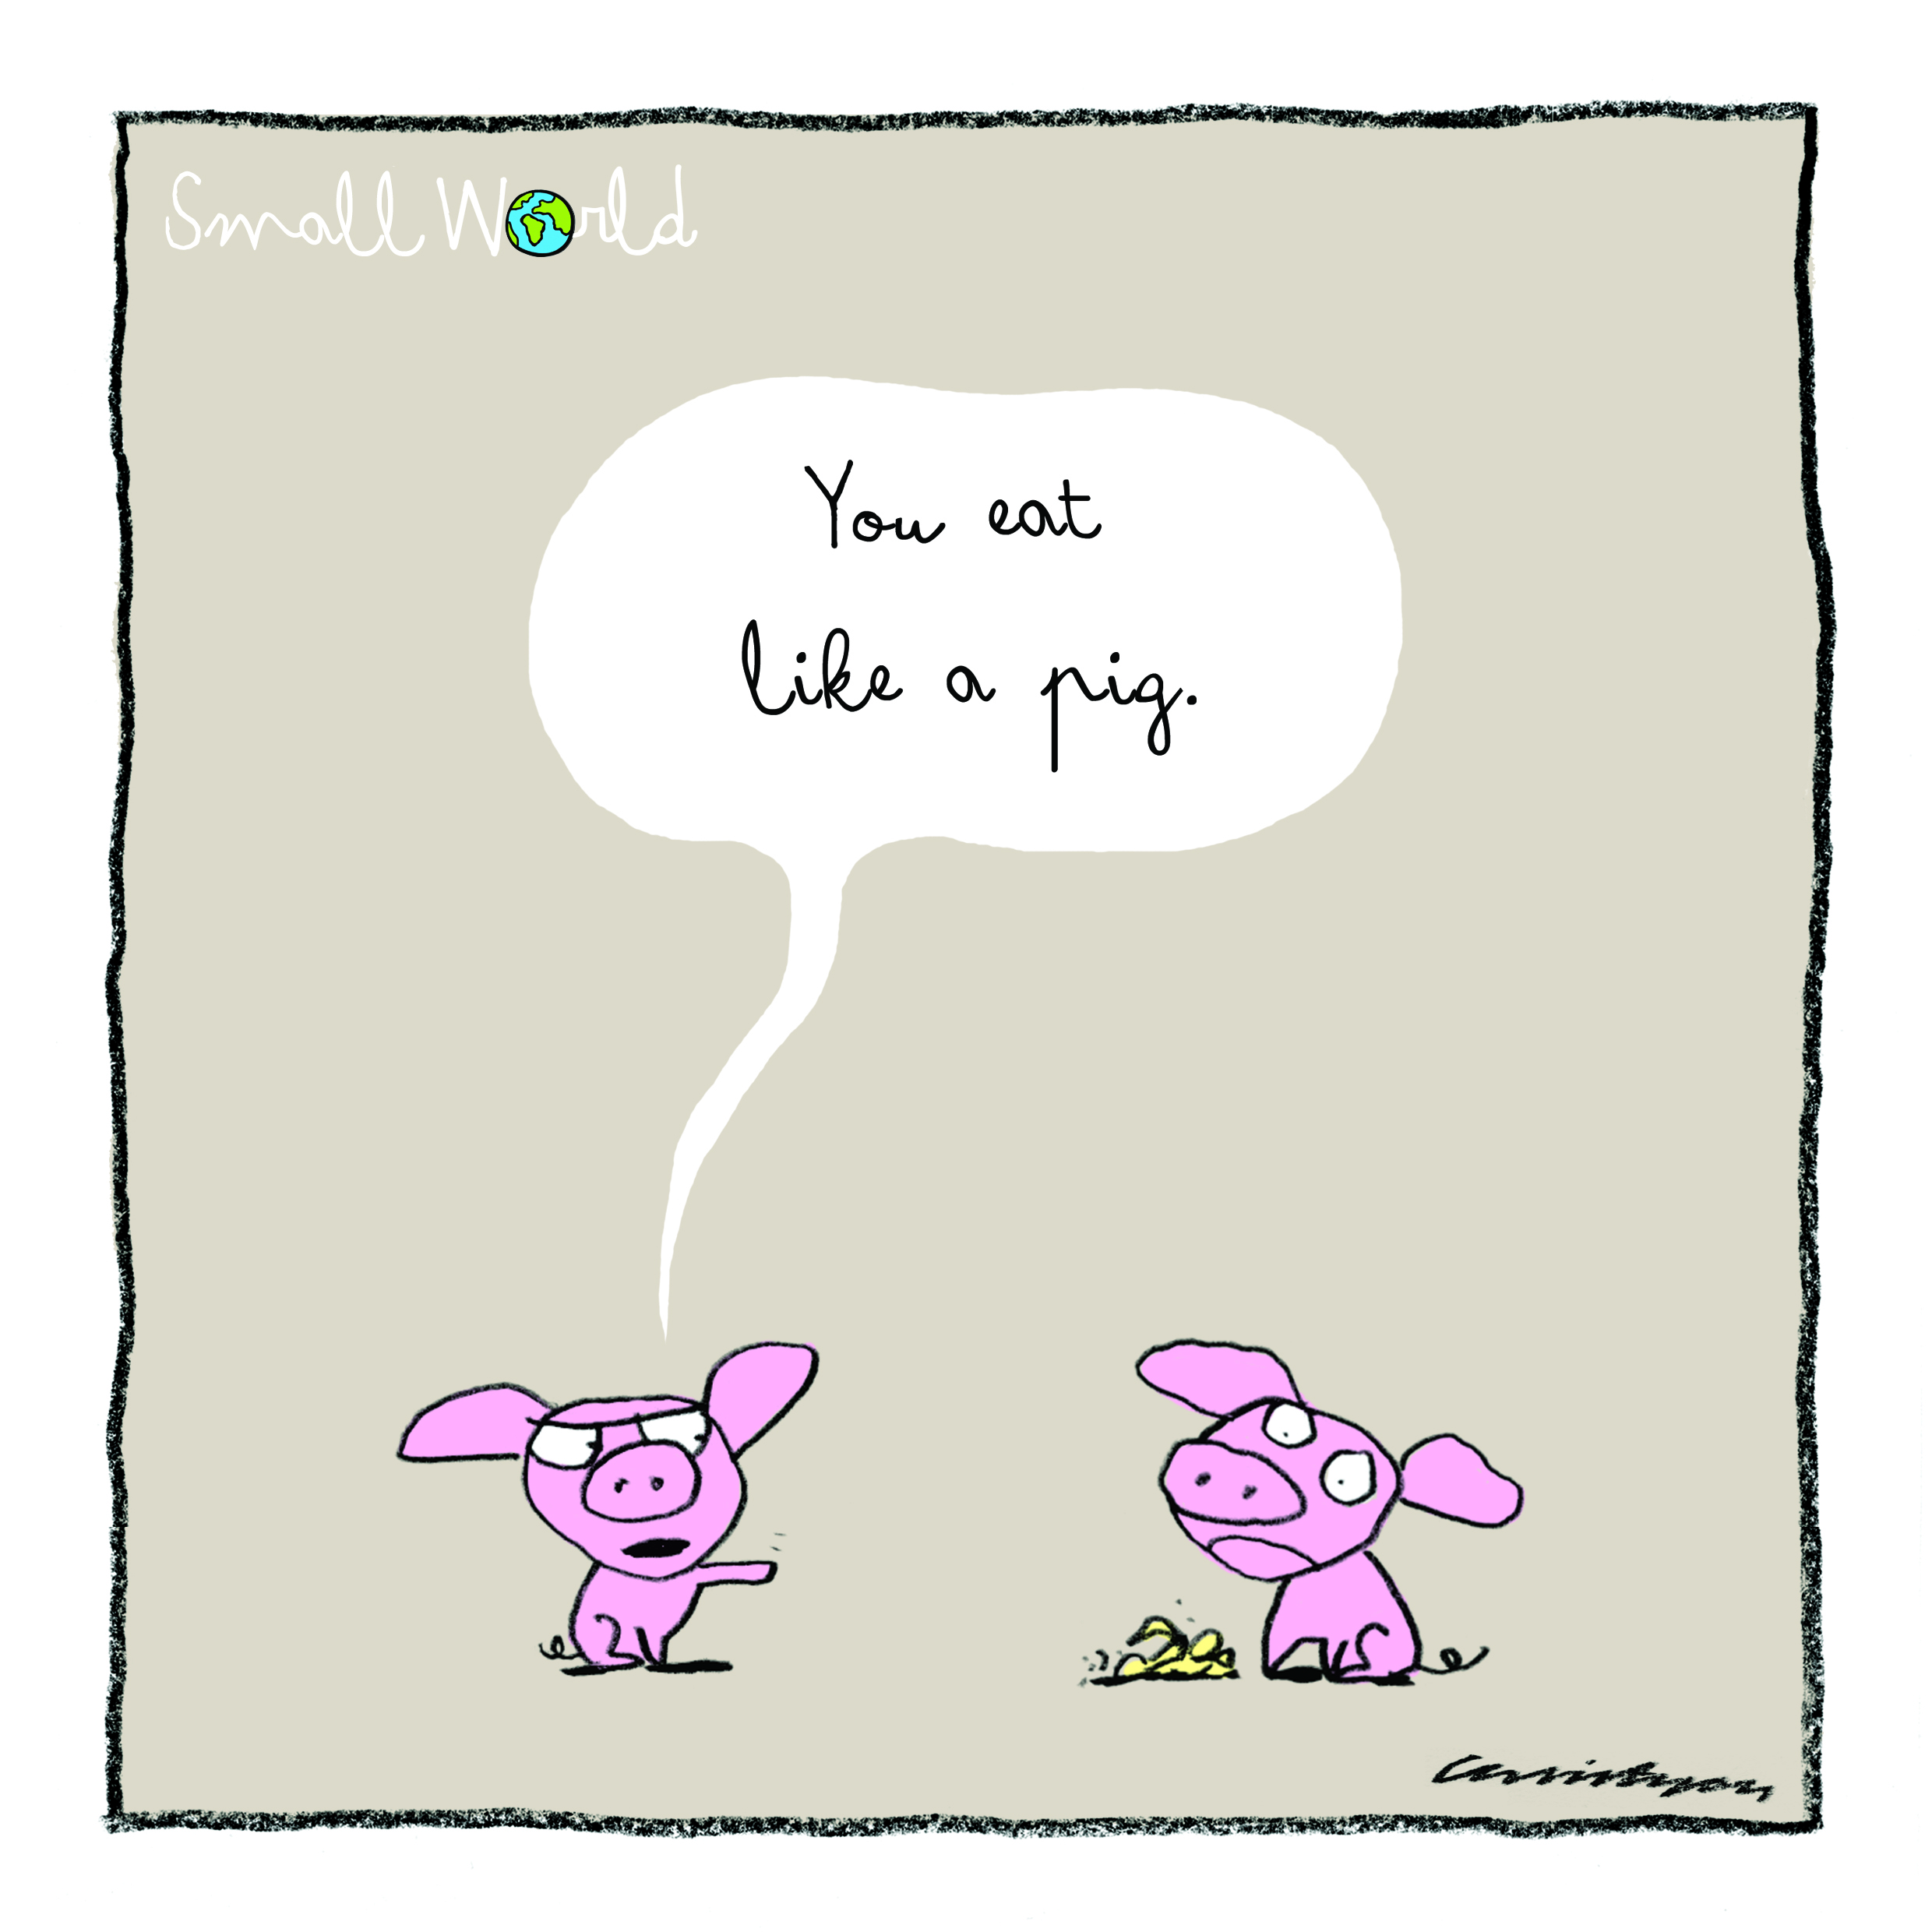 Pig card copy.jpg